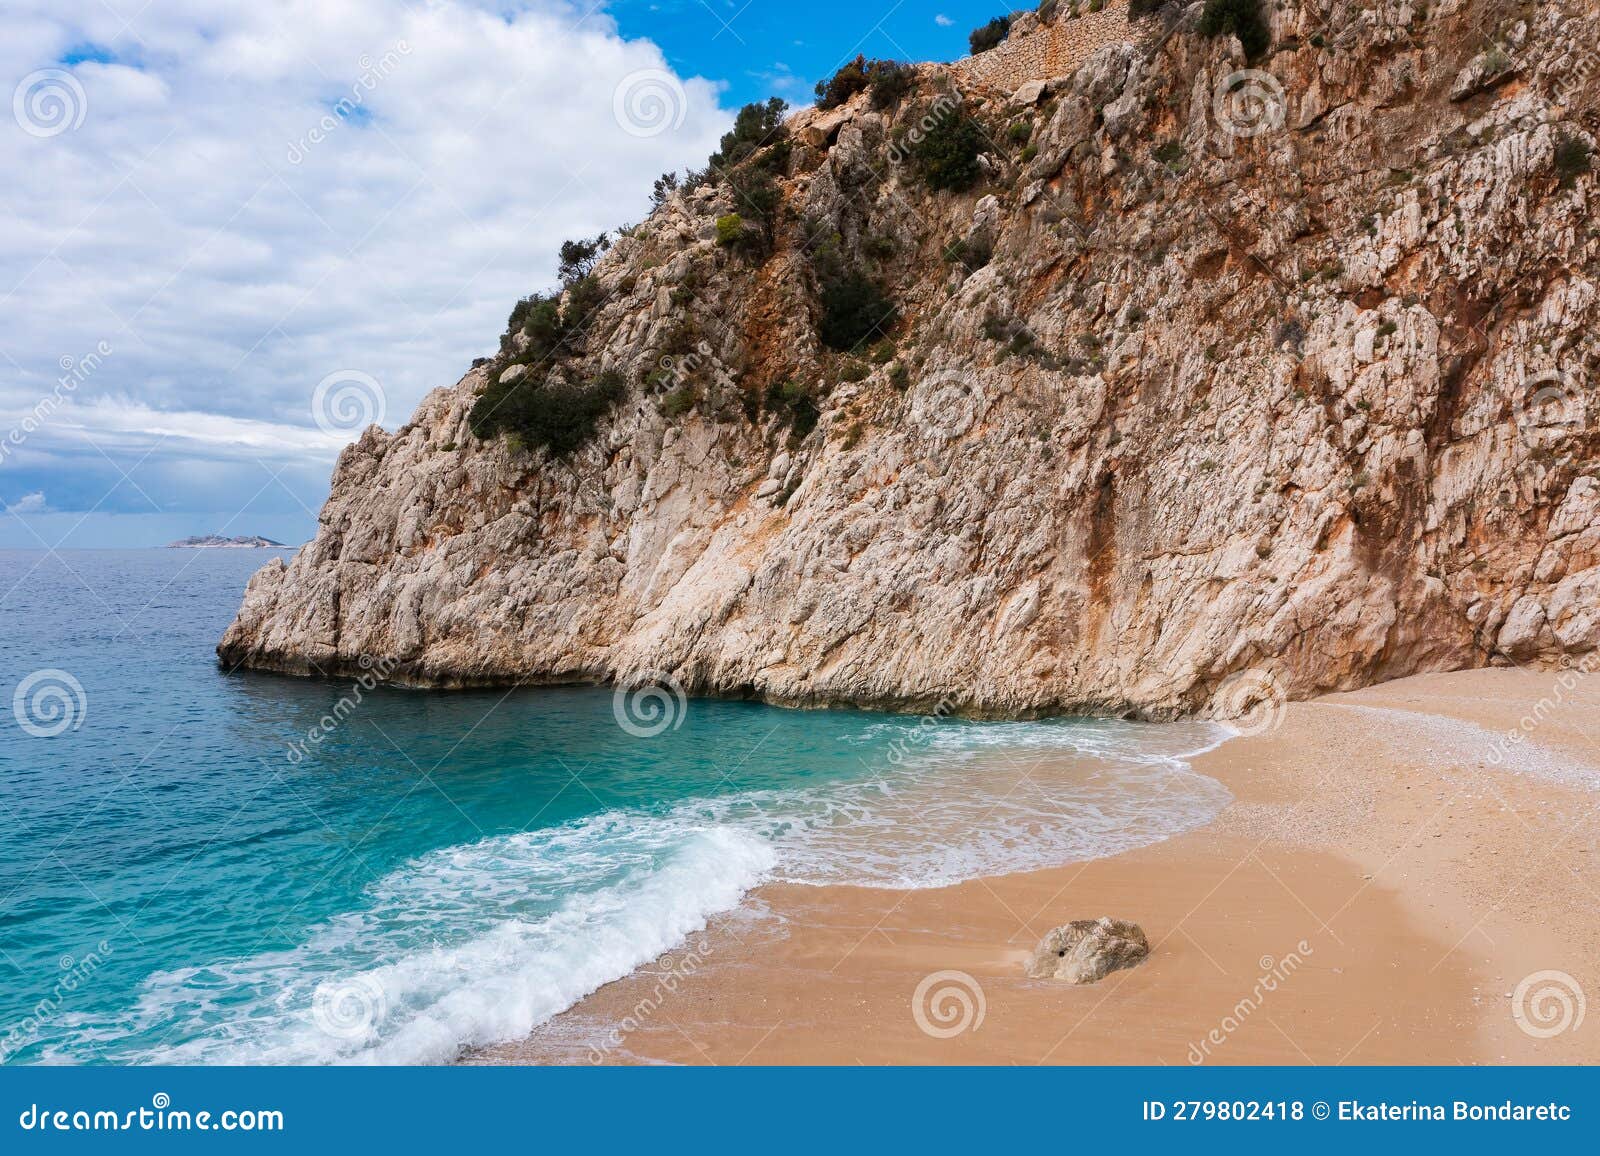 beautiful bay with a beach and turquoise sea among big mountains. kaputas beach, kas, tÃ¼rkiye.